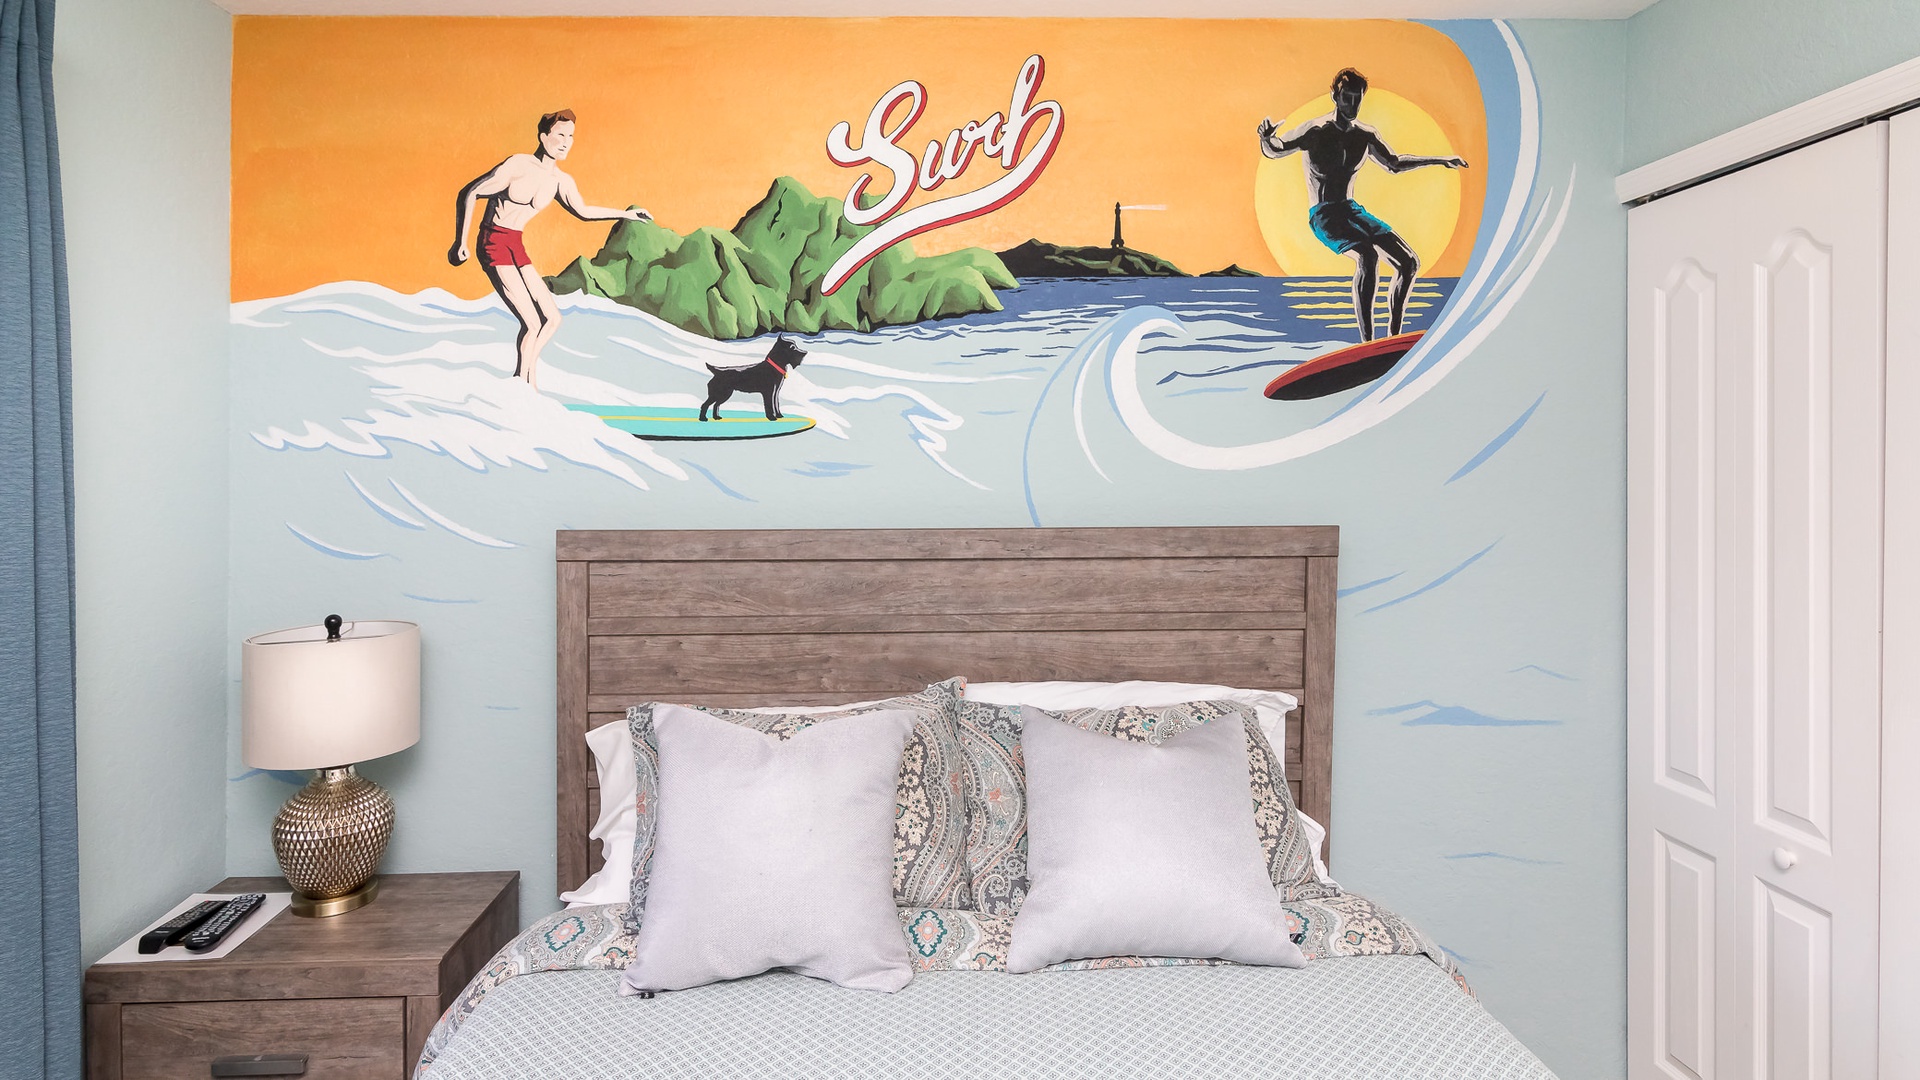 Surf themed room